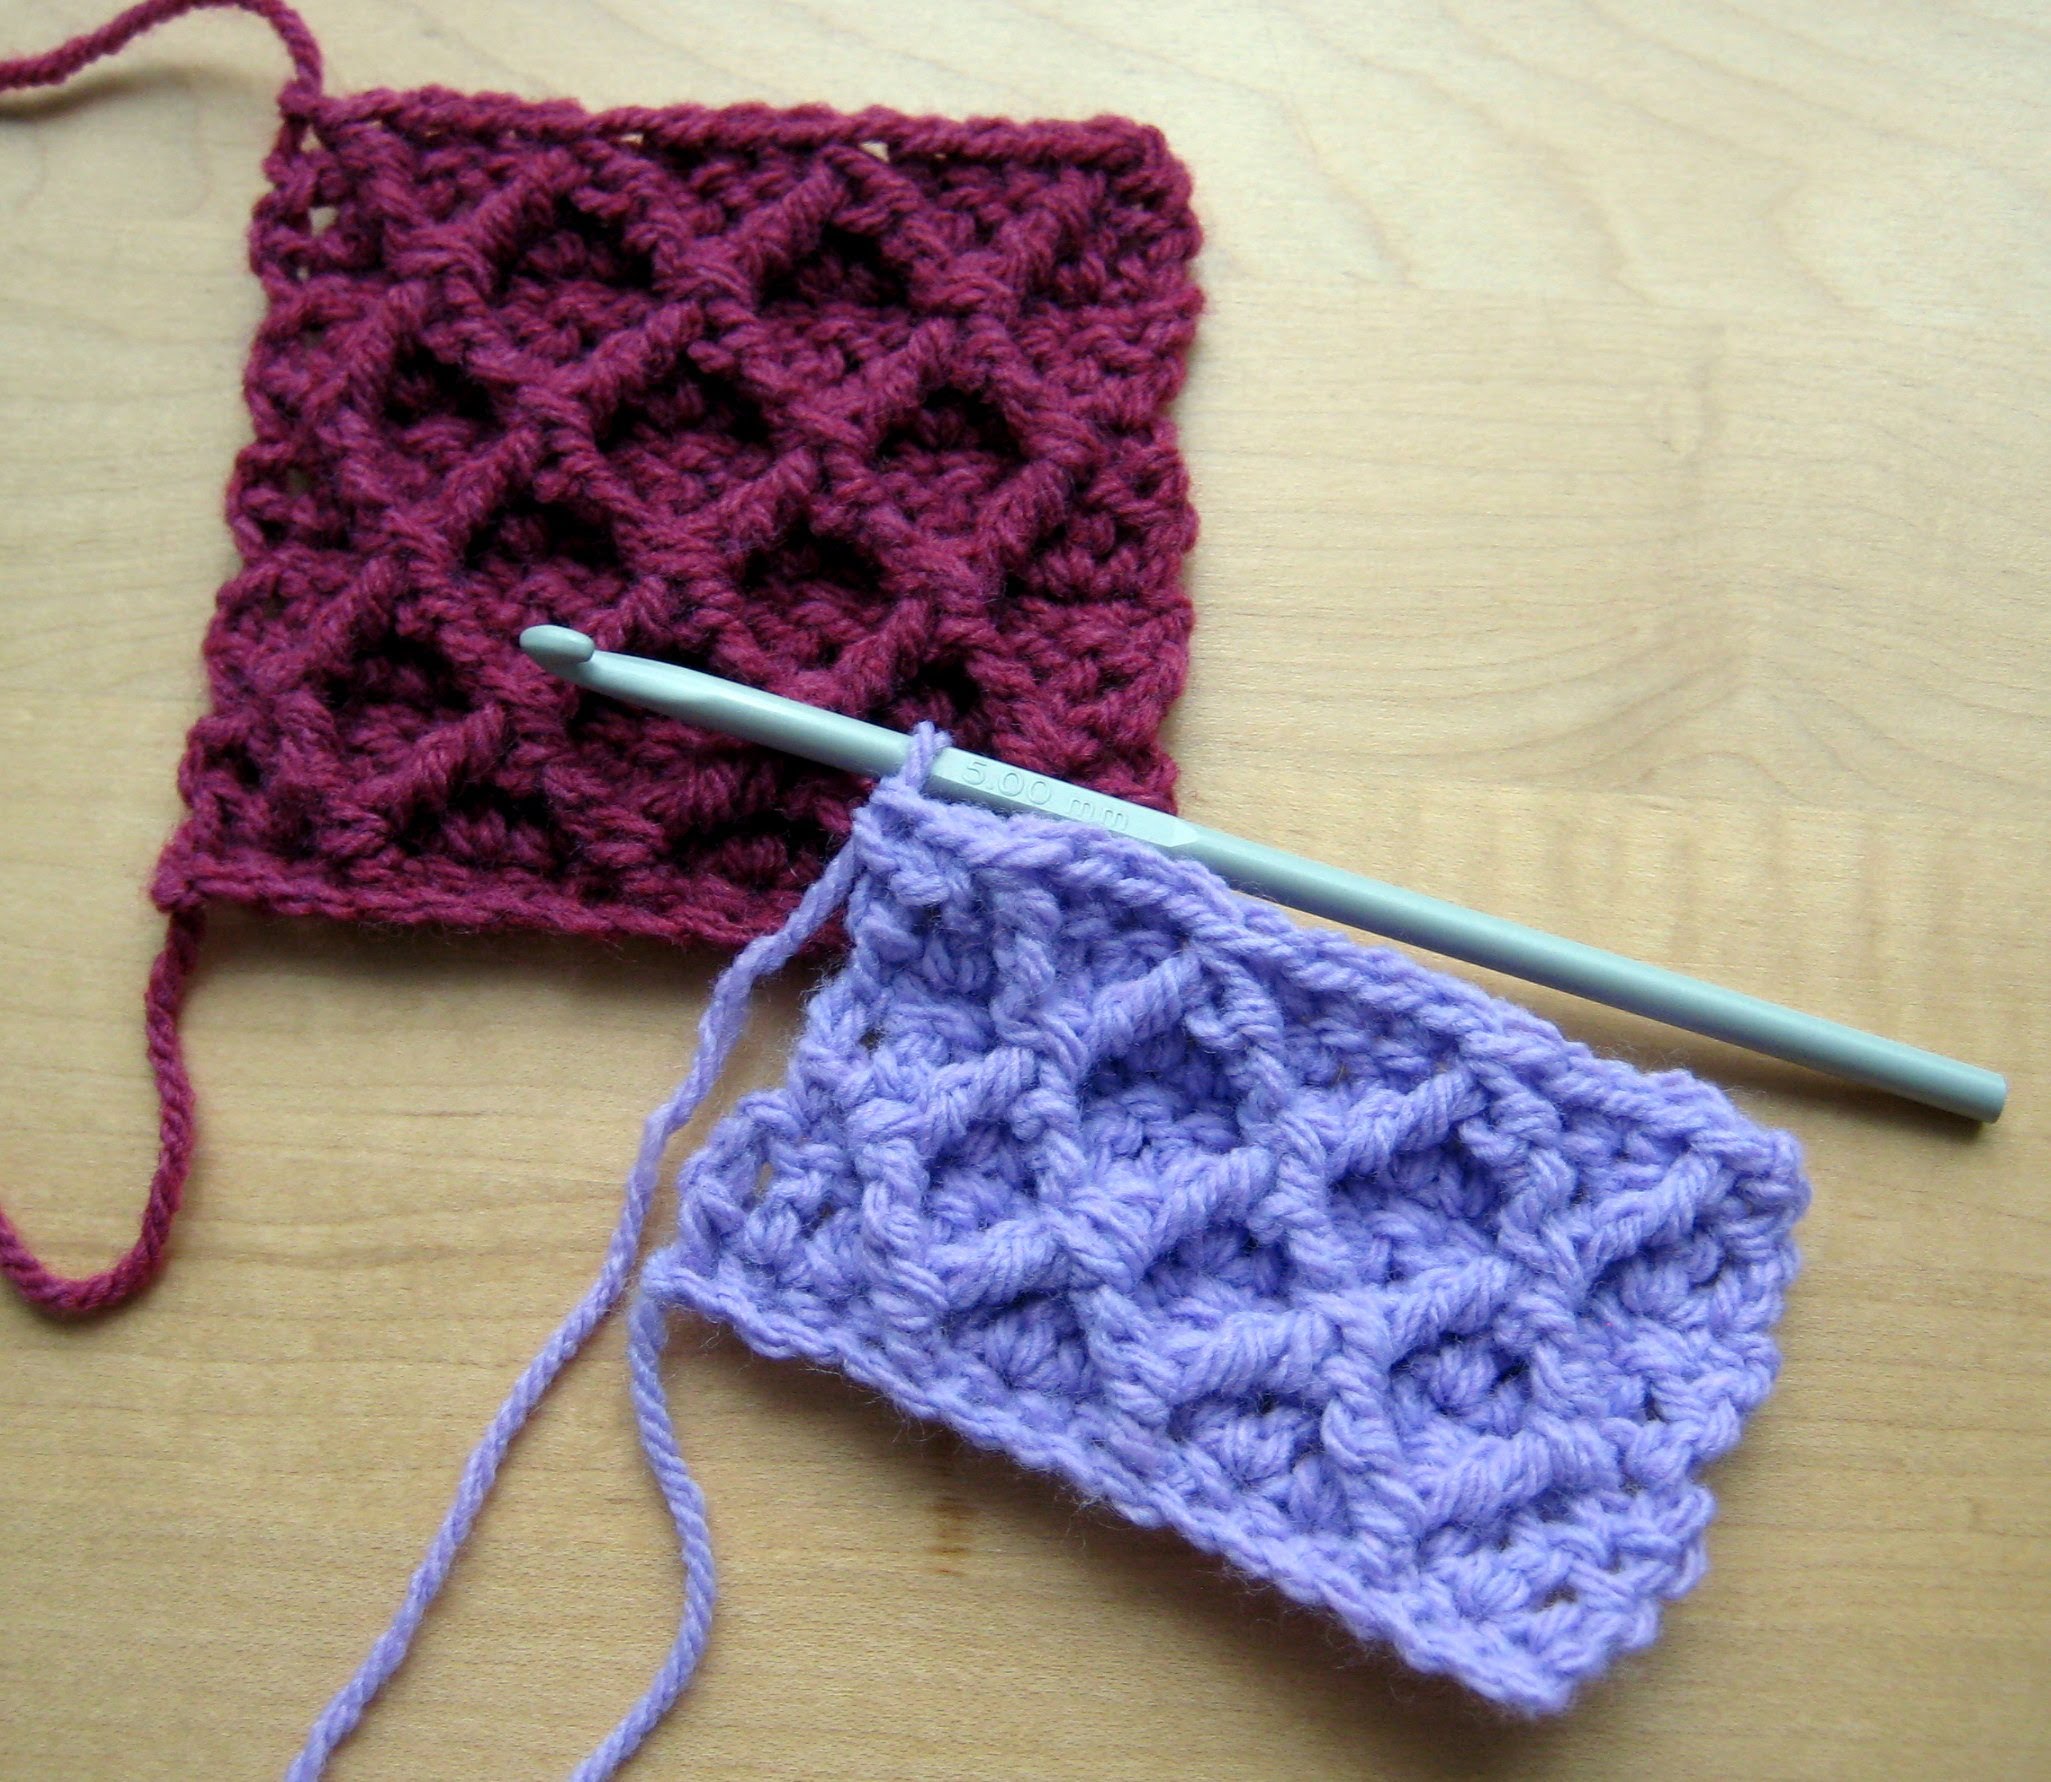 Crochet stitches – Catch the new Stitch